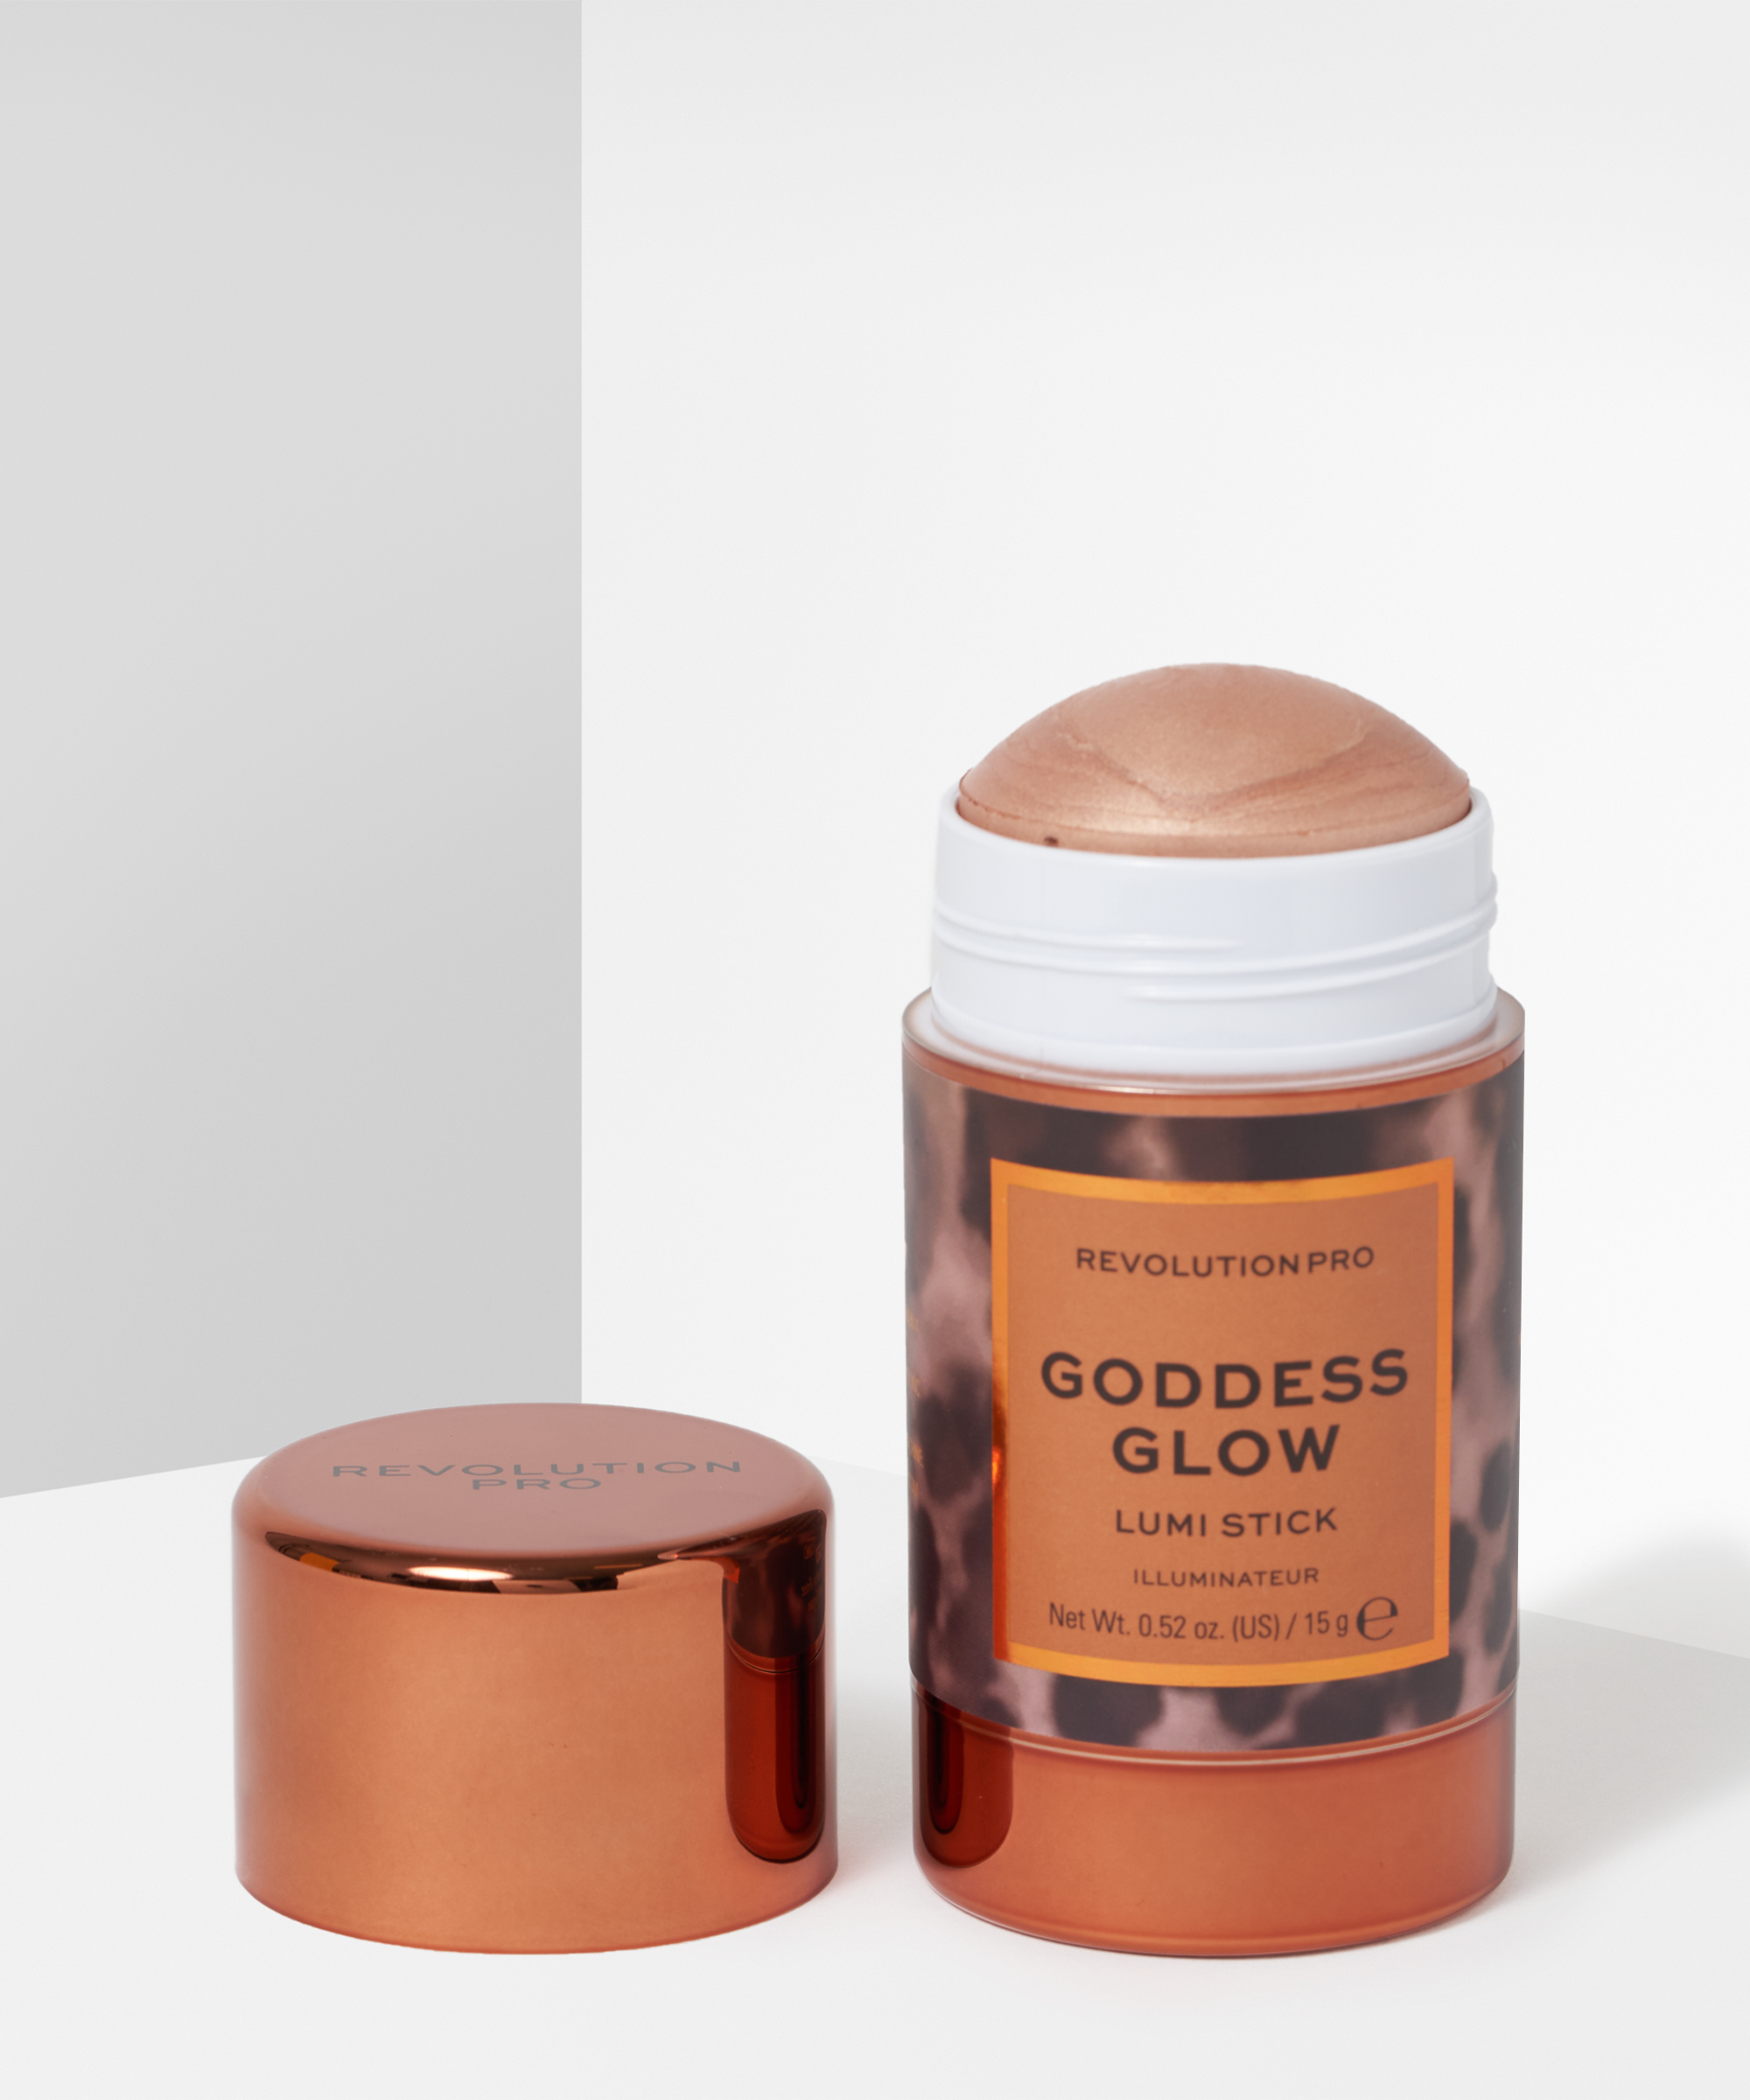 Realhomelove Goddess Glow Makeup Shimmer Stick, Goddess-glow